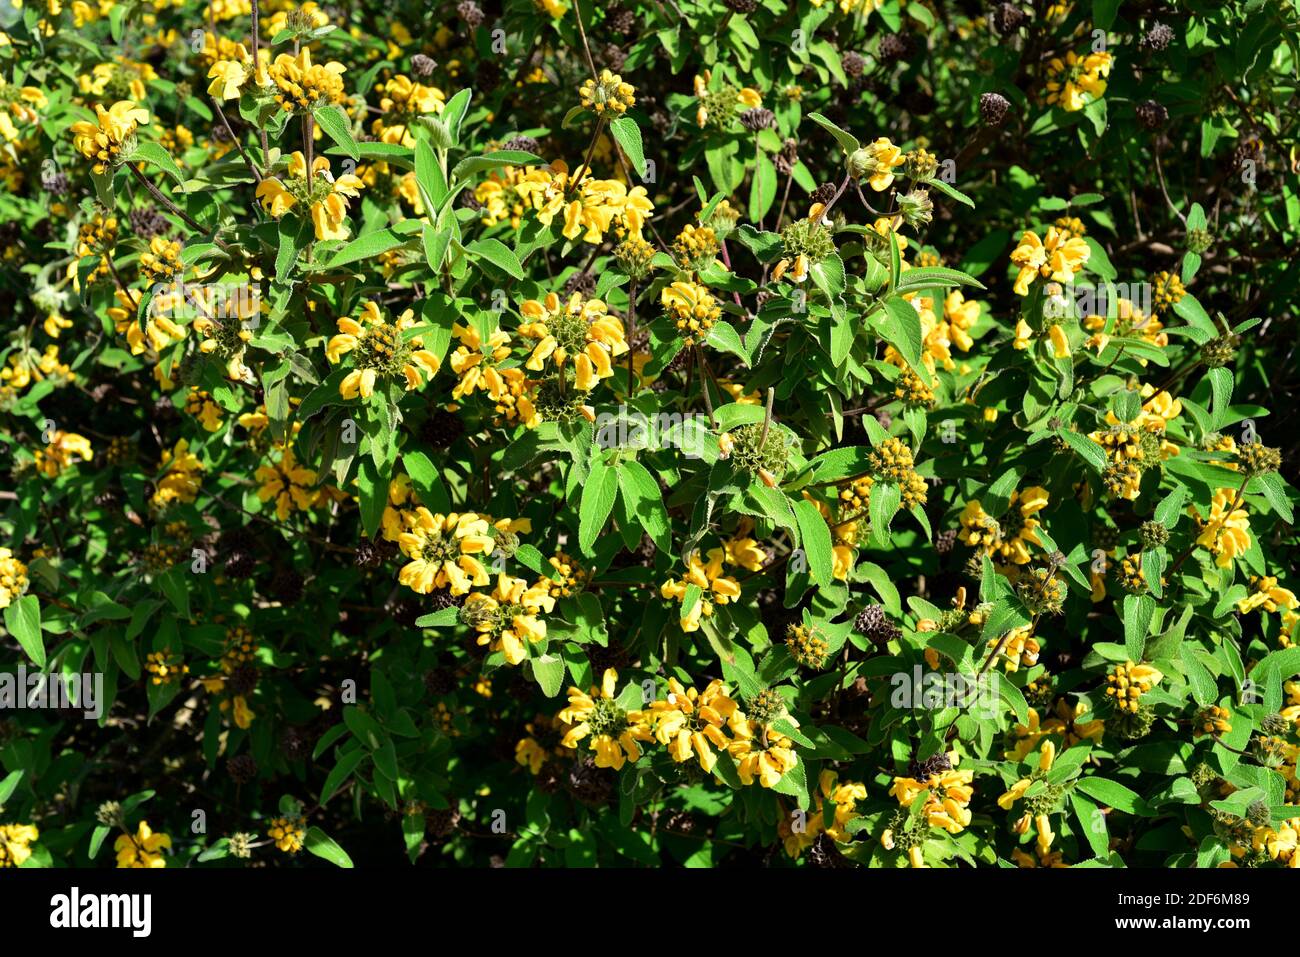 Cyprus sage (Phlomis cypria) is an endangered shrub endemic to Cyprus. Stock Photo